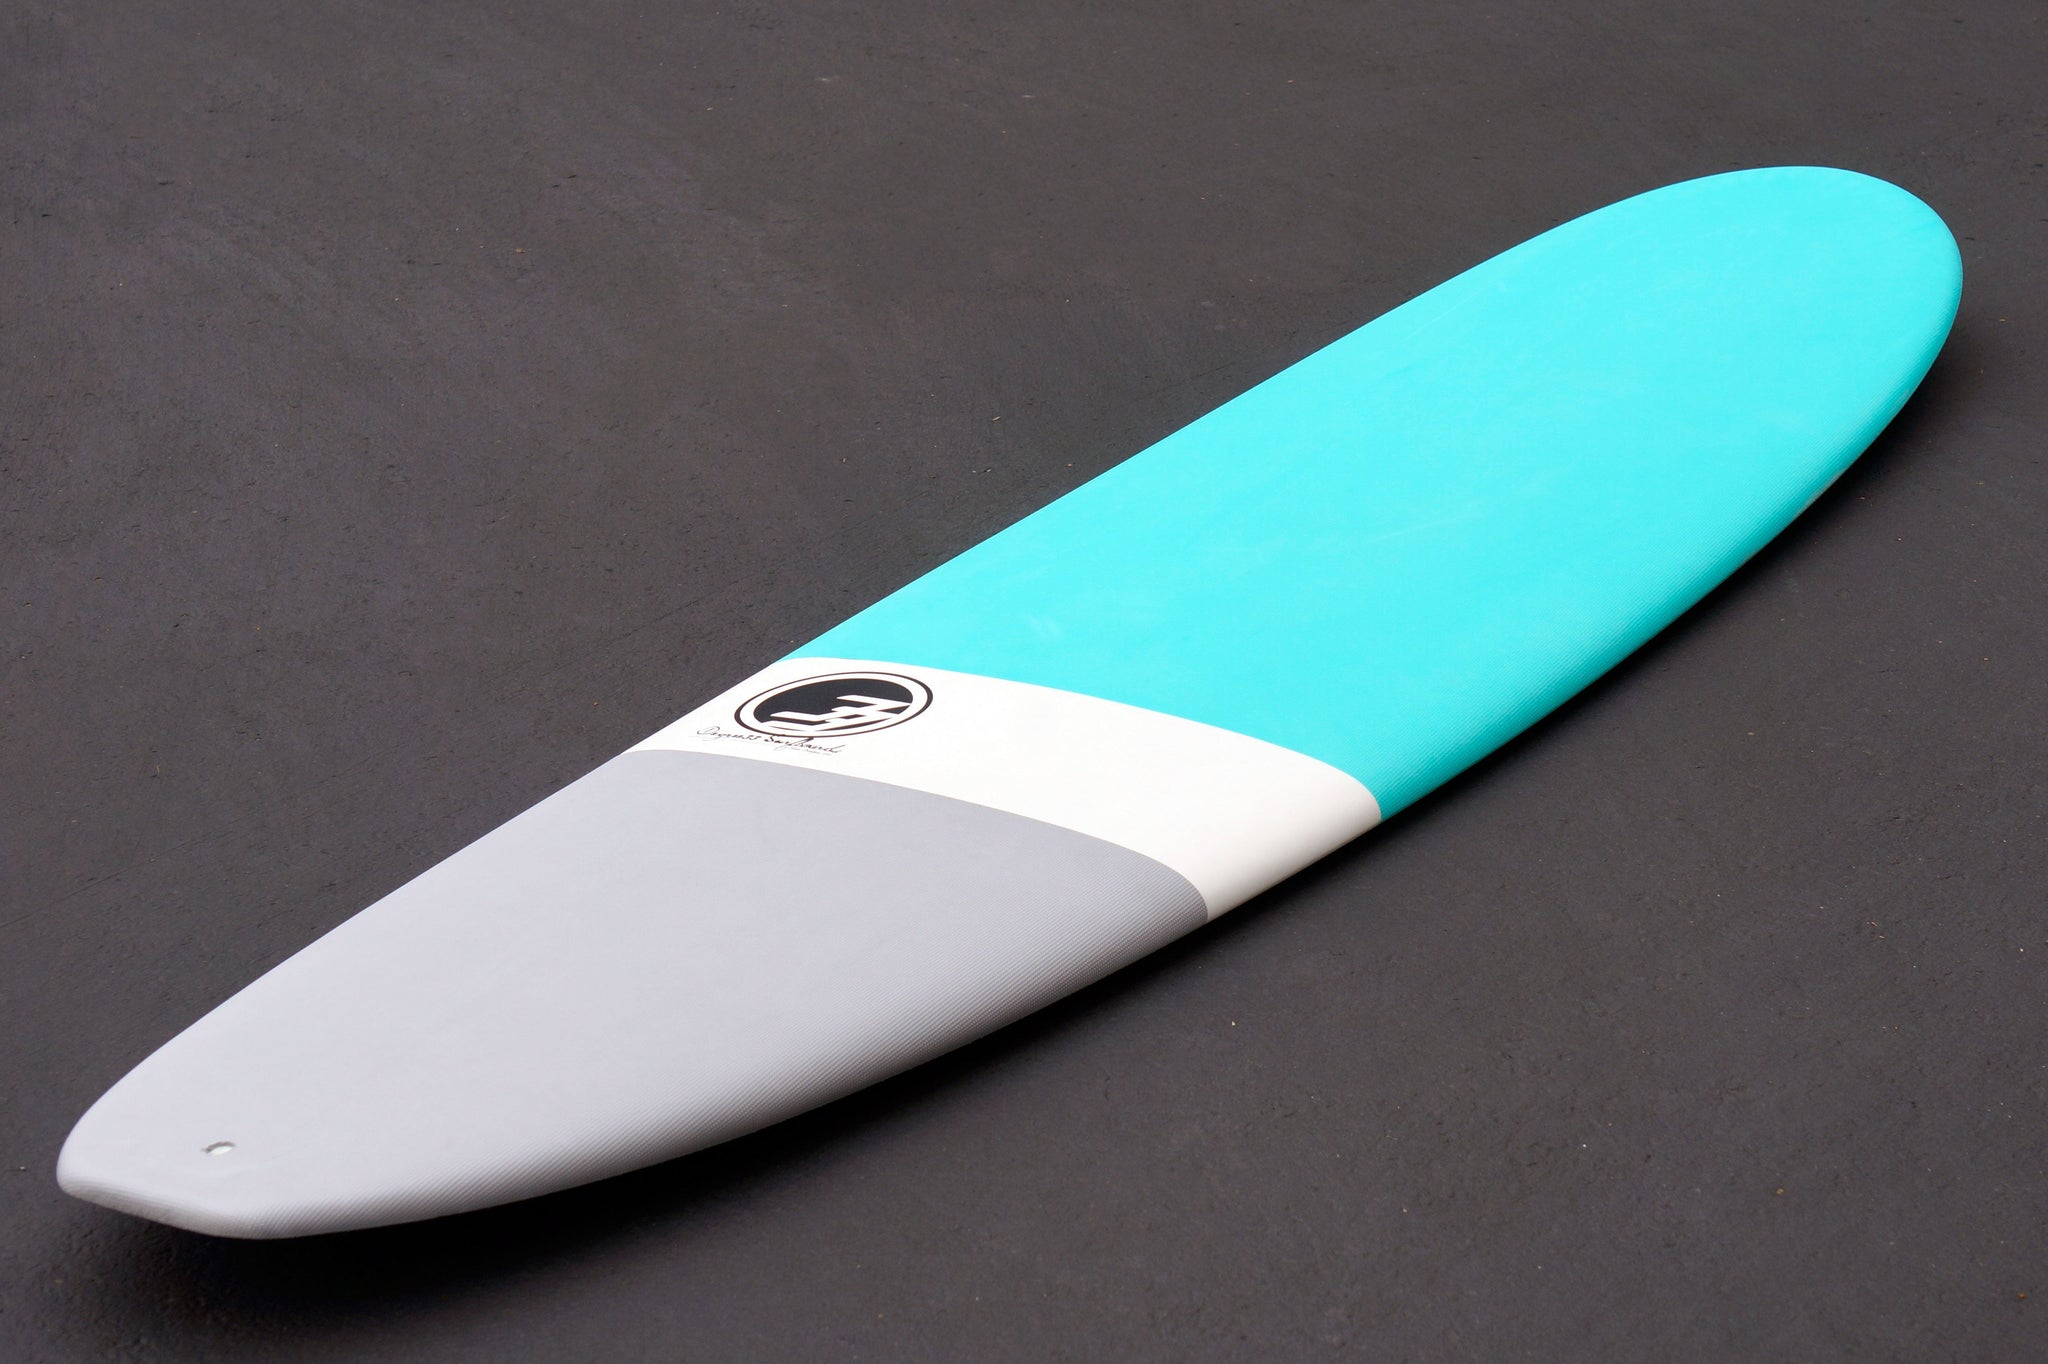 10' Ultimate Longboard Surfboard Aqua Dip (Hybrid Epoxy Softtop